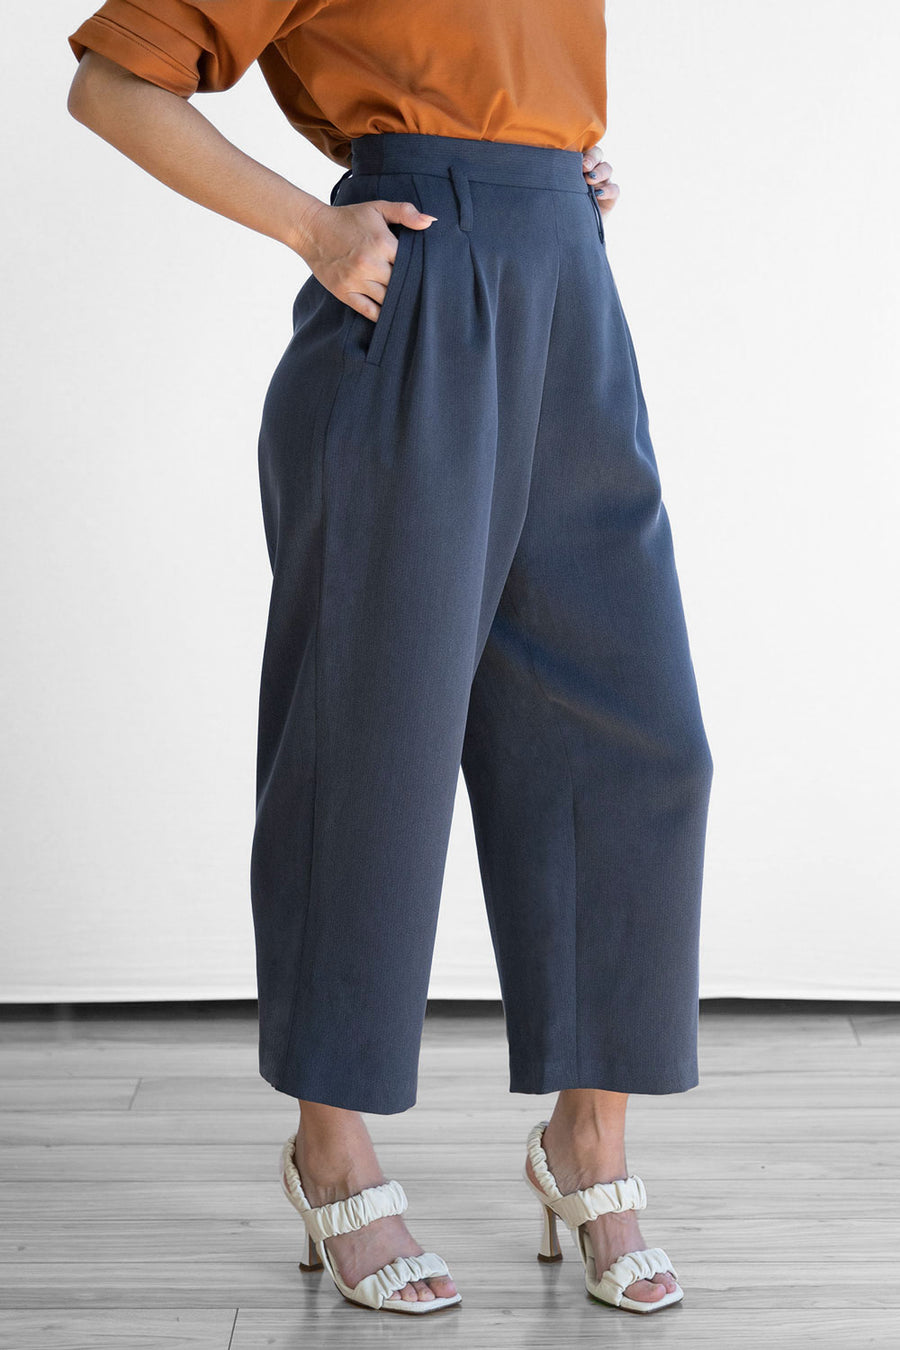 Tailored Culottes - Slate Gray (US 4, 6, 10)